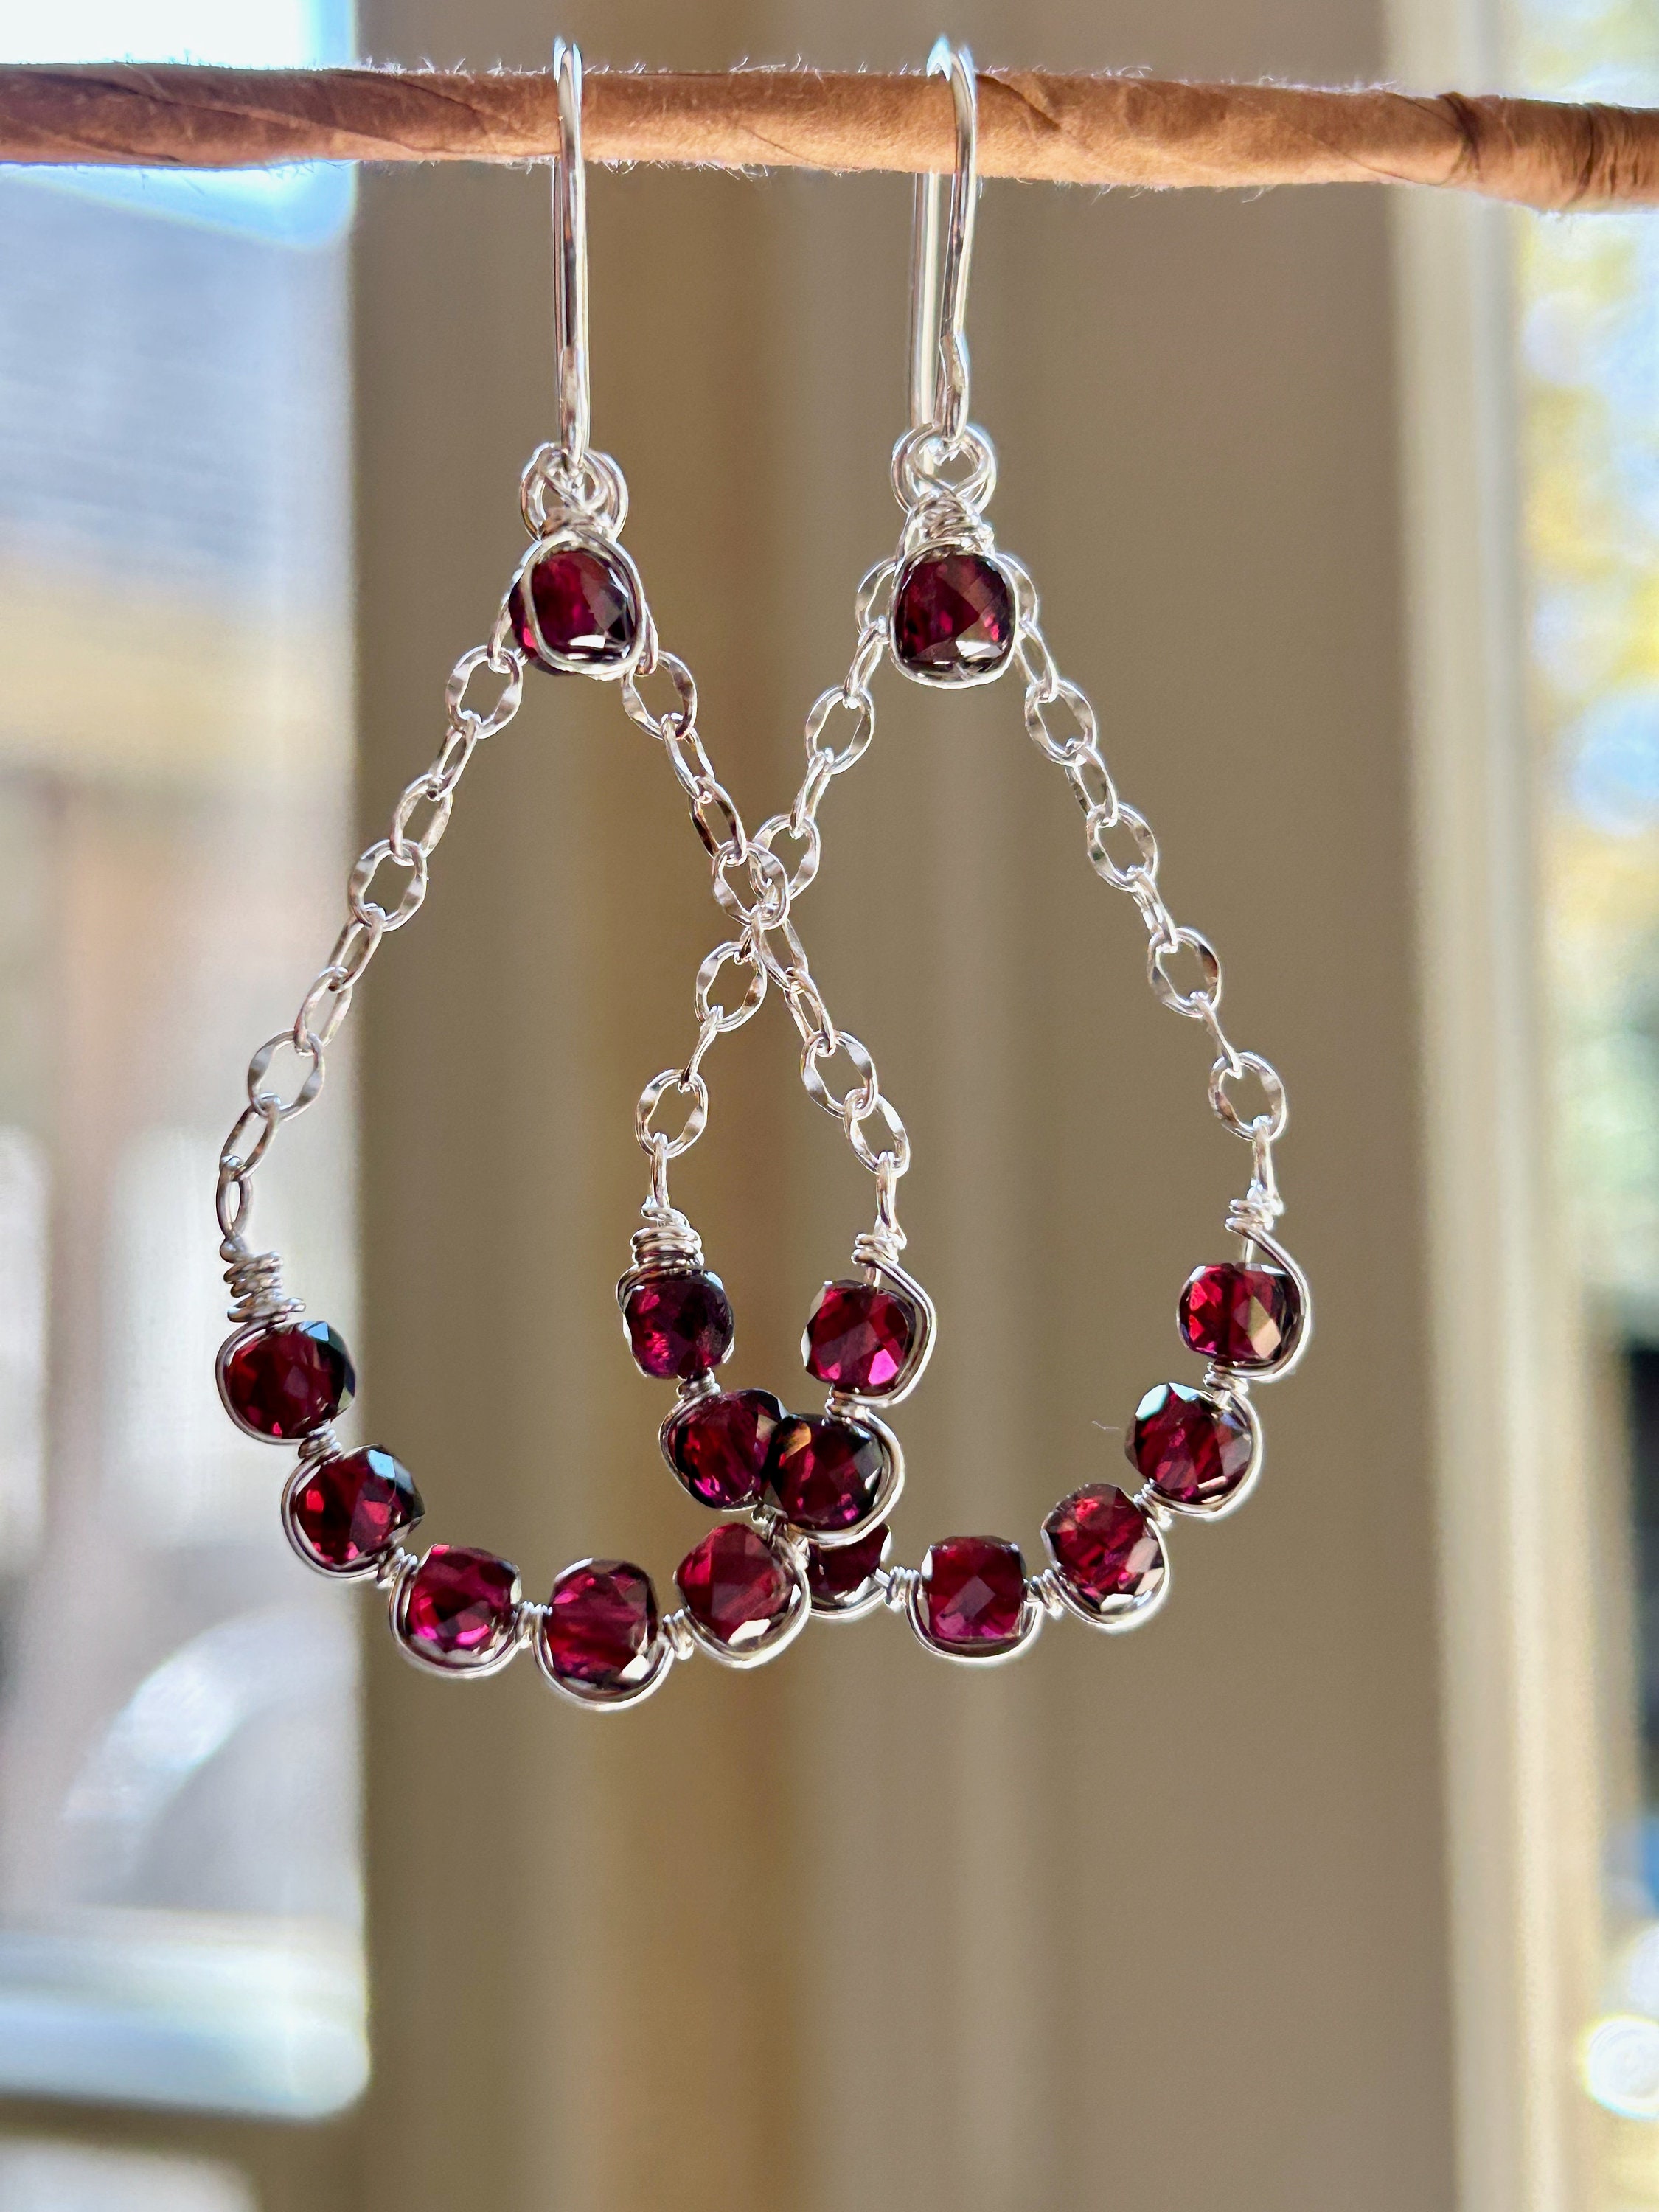 Garnet Crystal Earrings with Ornate Sterling Silver Beads - Simple